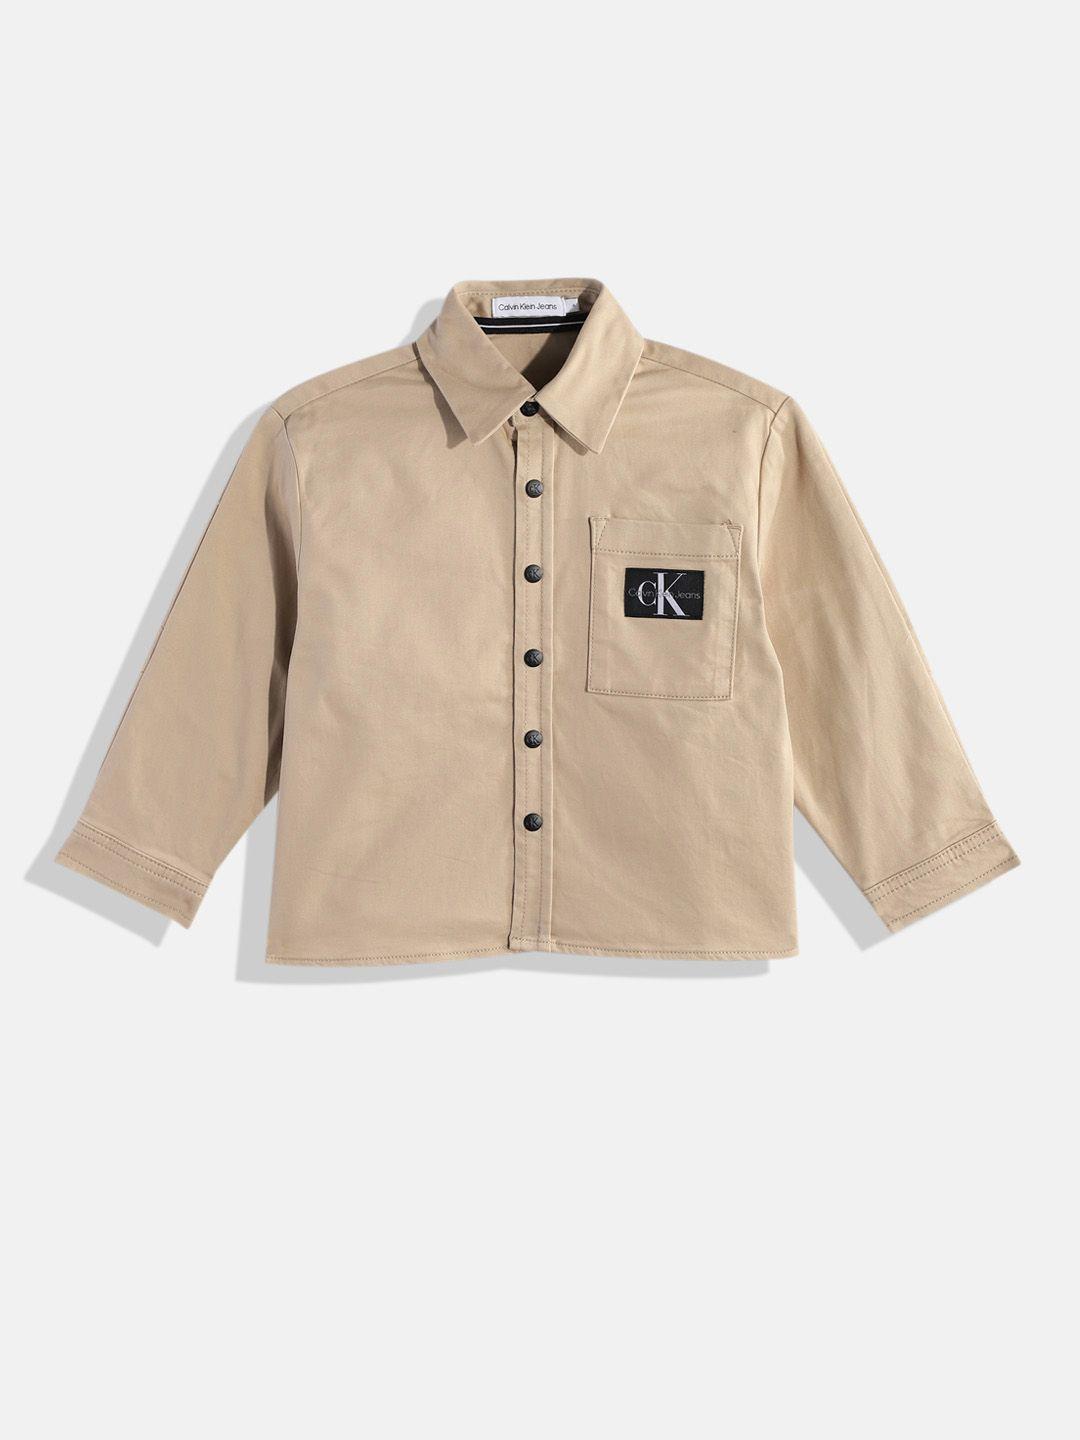 calvin klein boys solid opaque casual shirt with chest pocket & brand logo applique detail